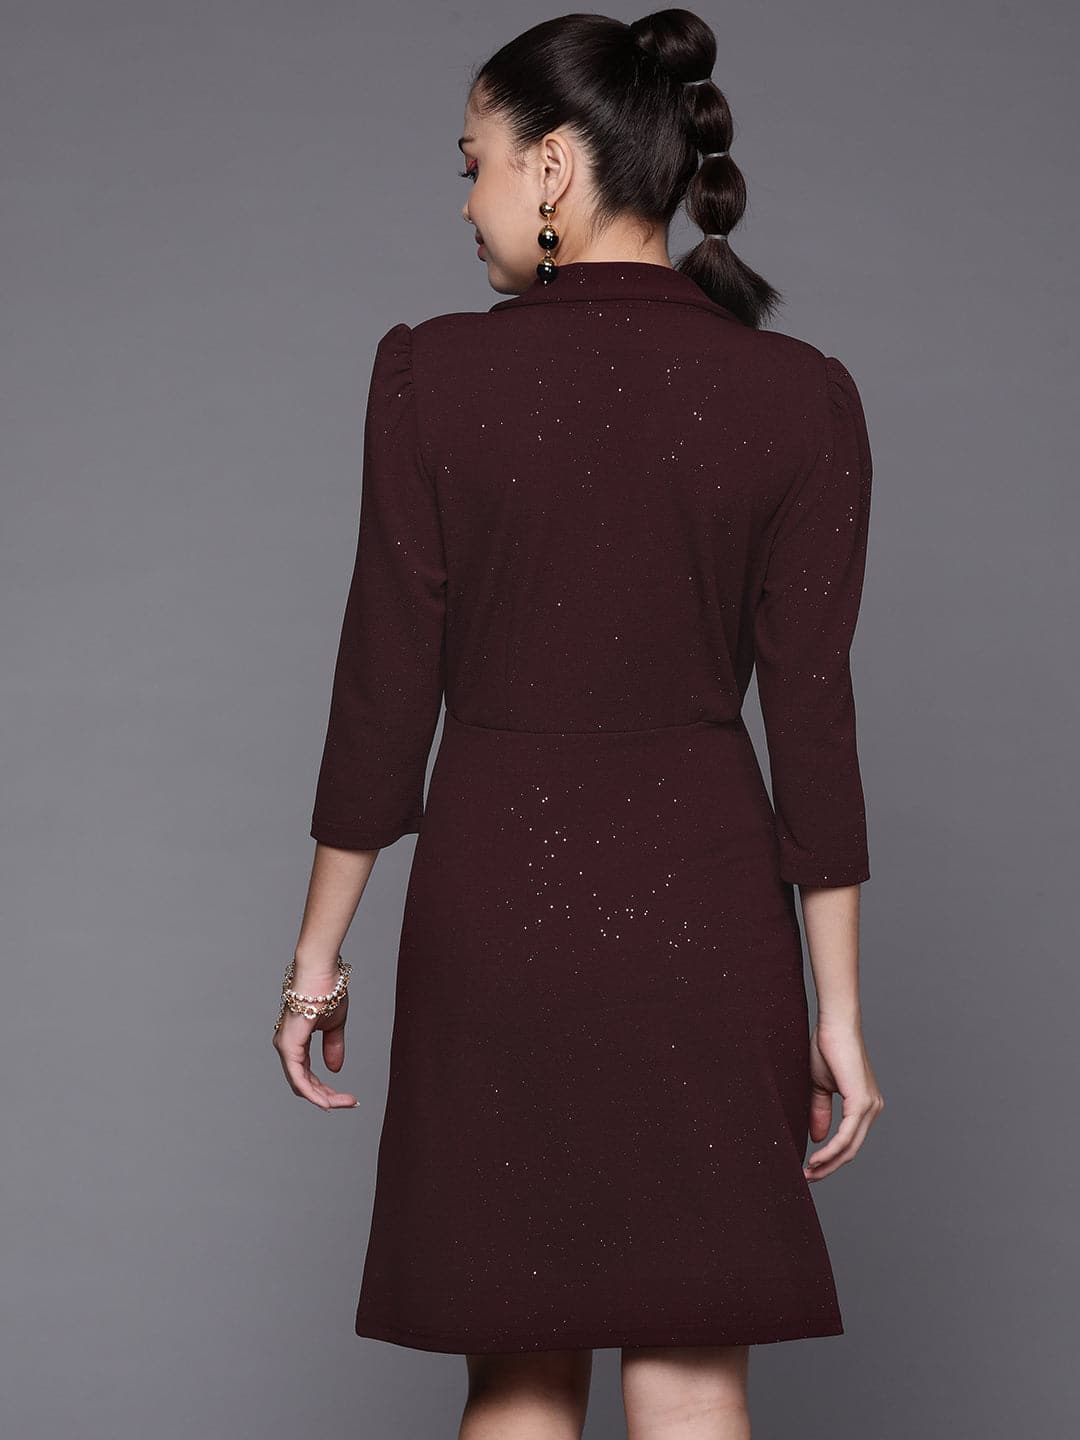 Women's Burgundy Shimmer Double Breasted Blazer Dress - Lyush